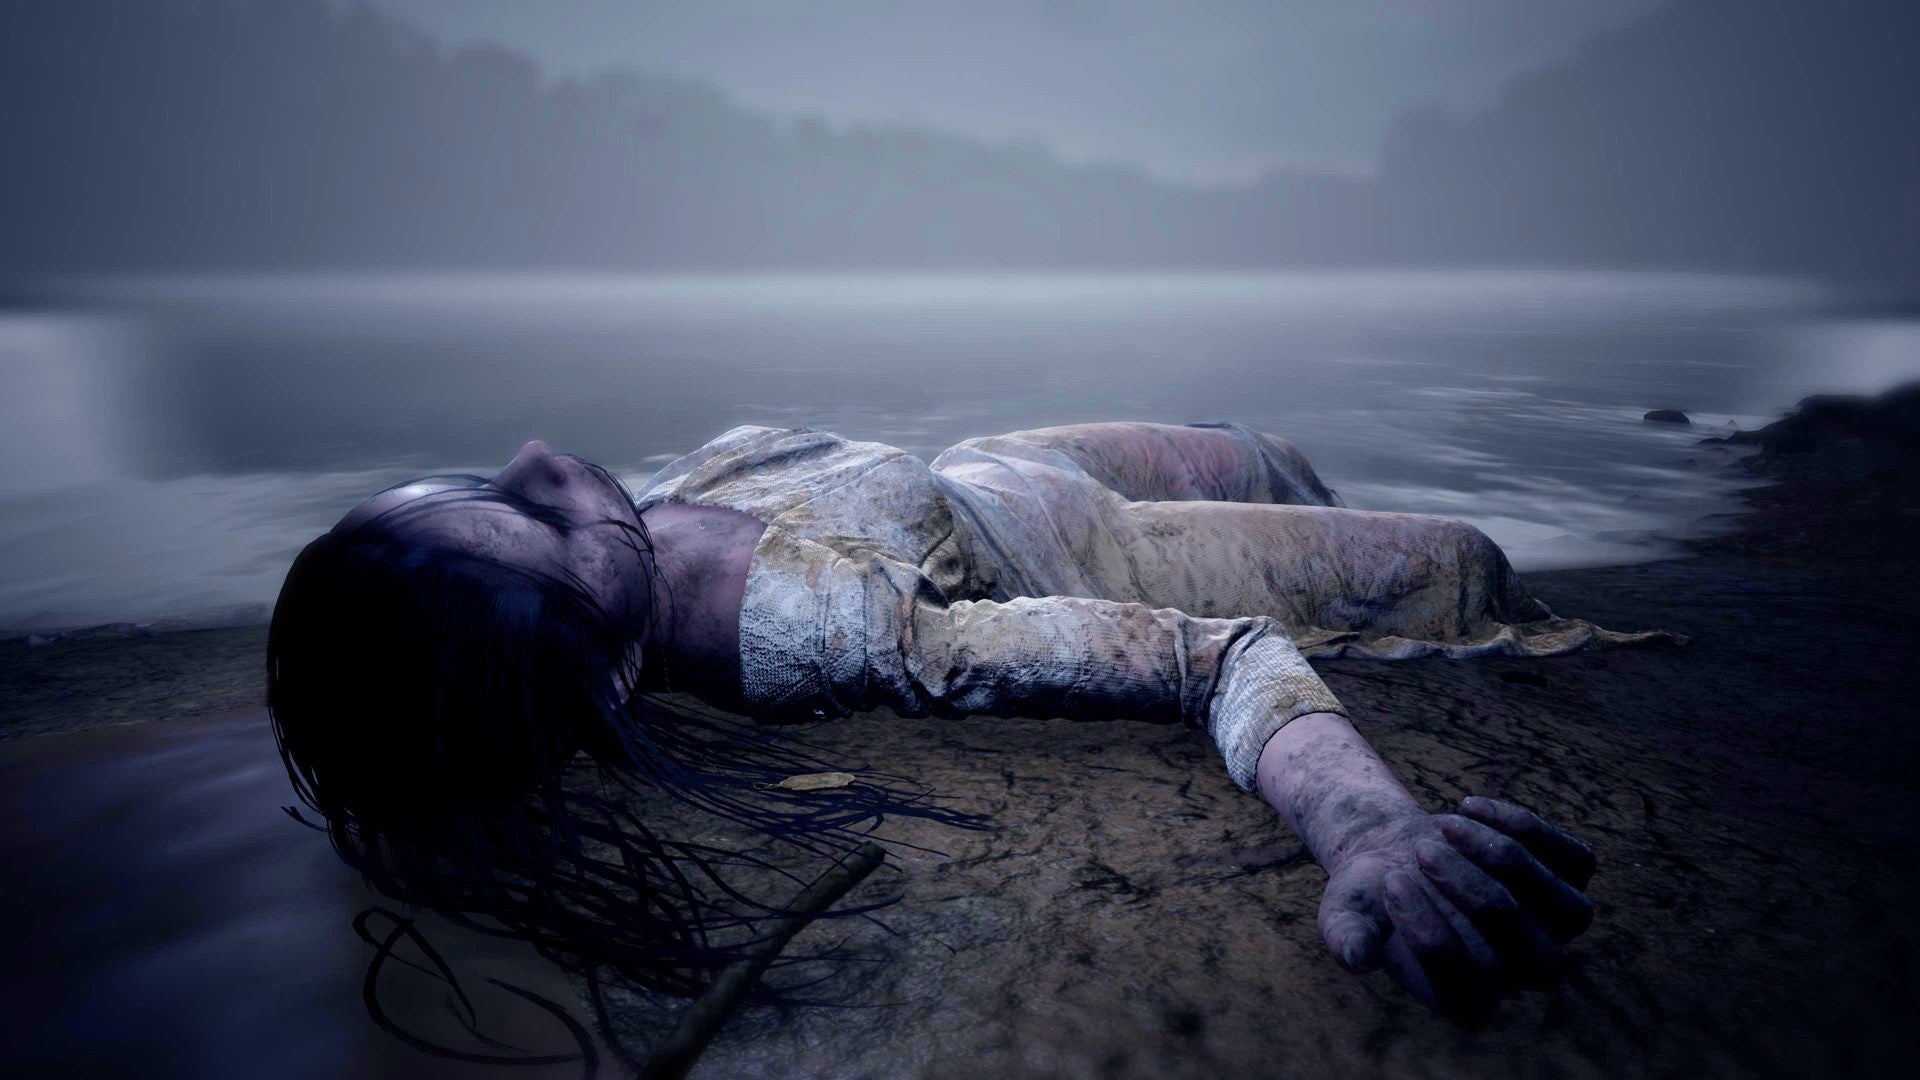 《Martha is Dead》截图，显示湖边的一个无生命身体